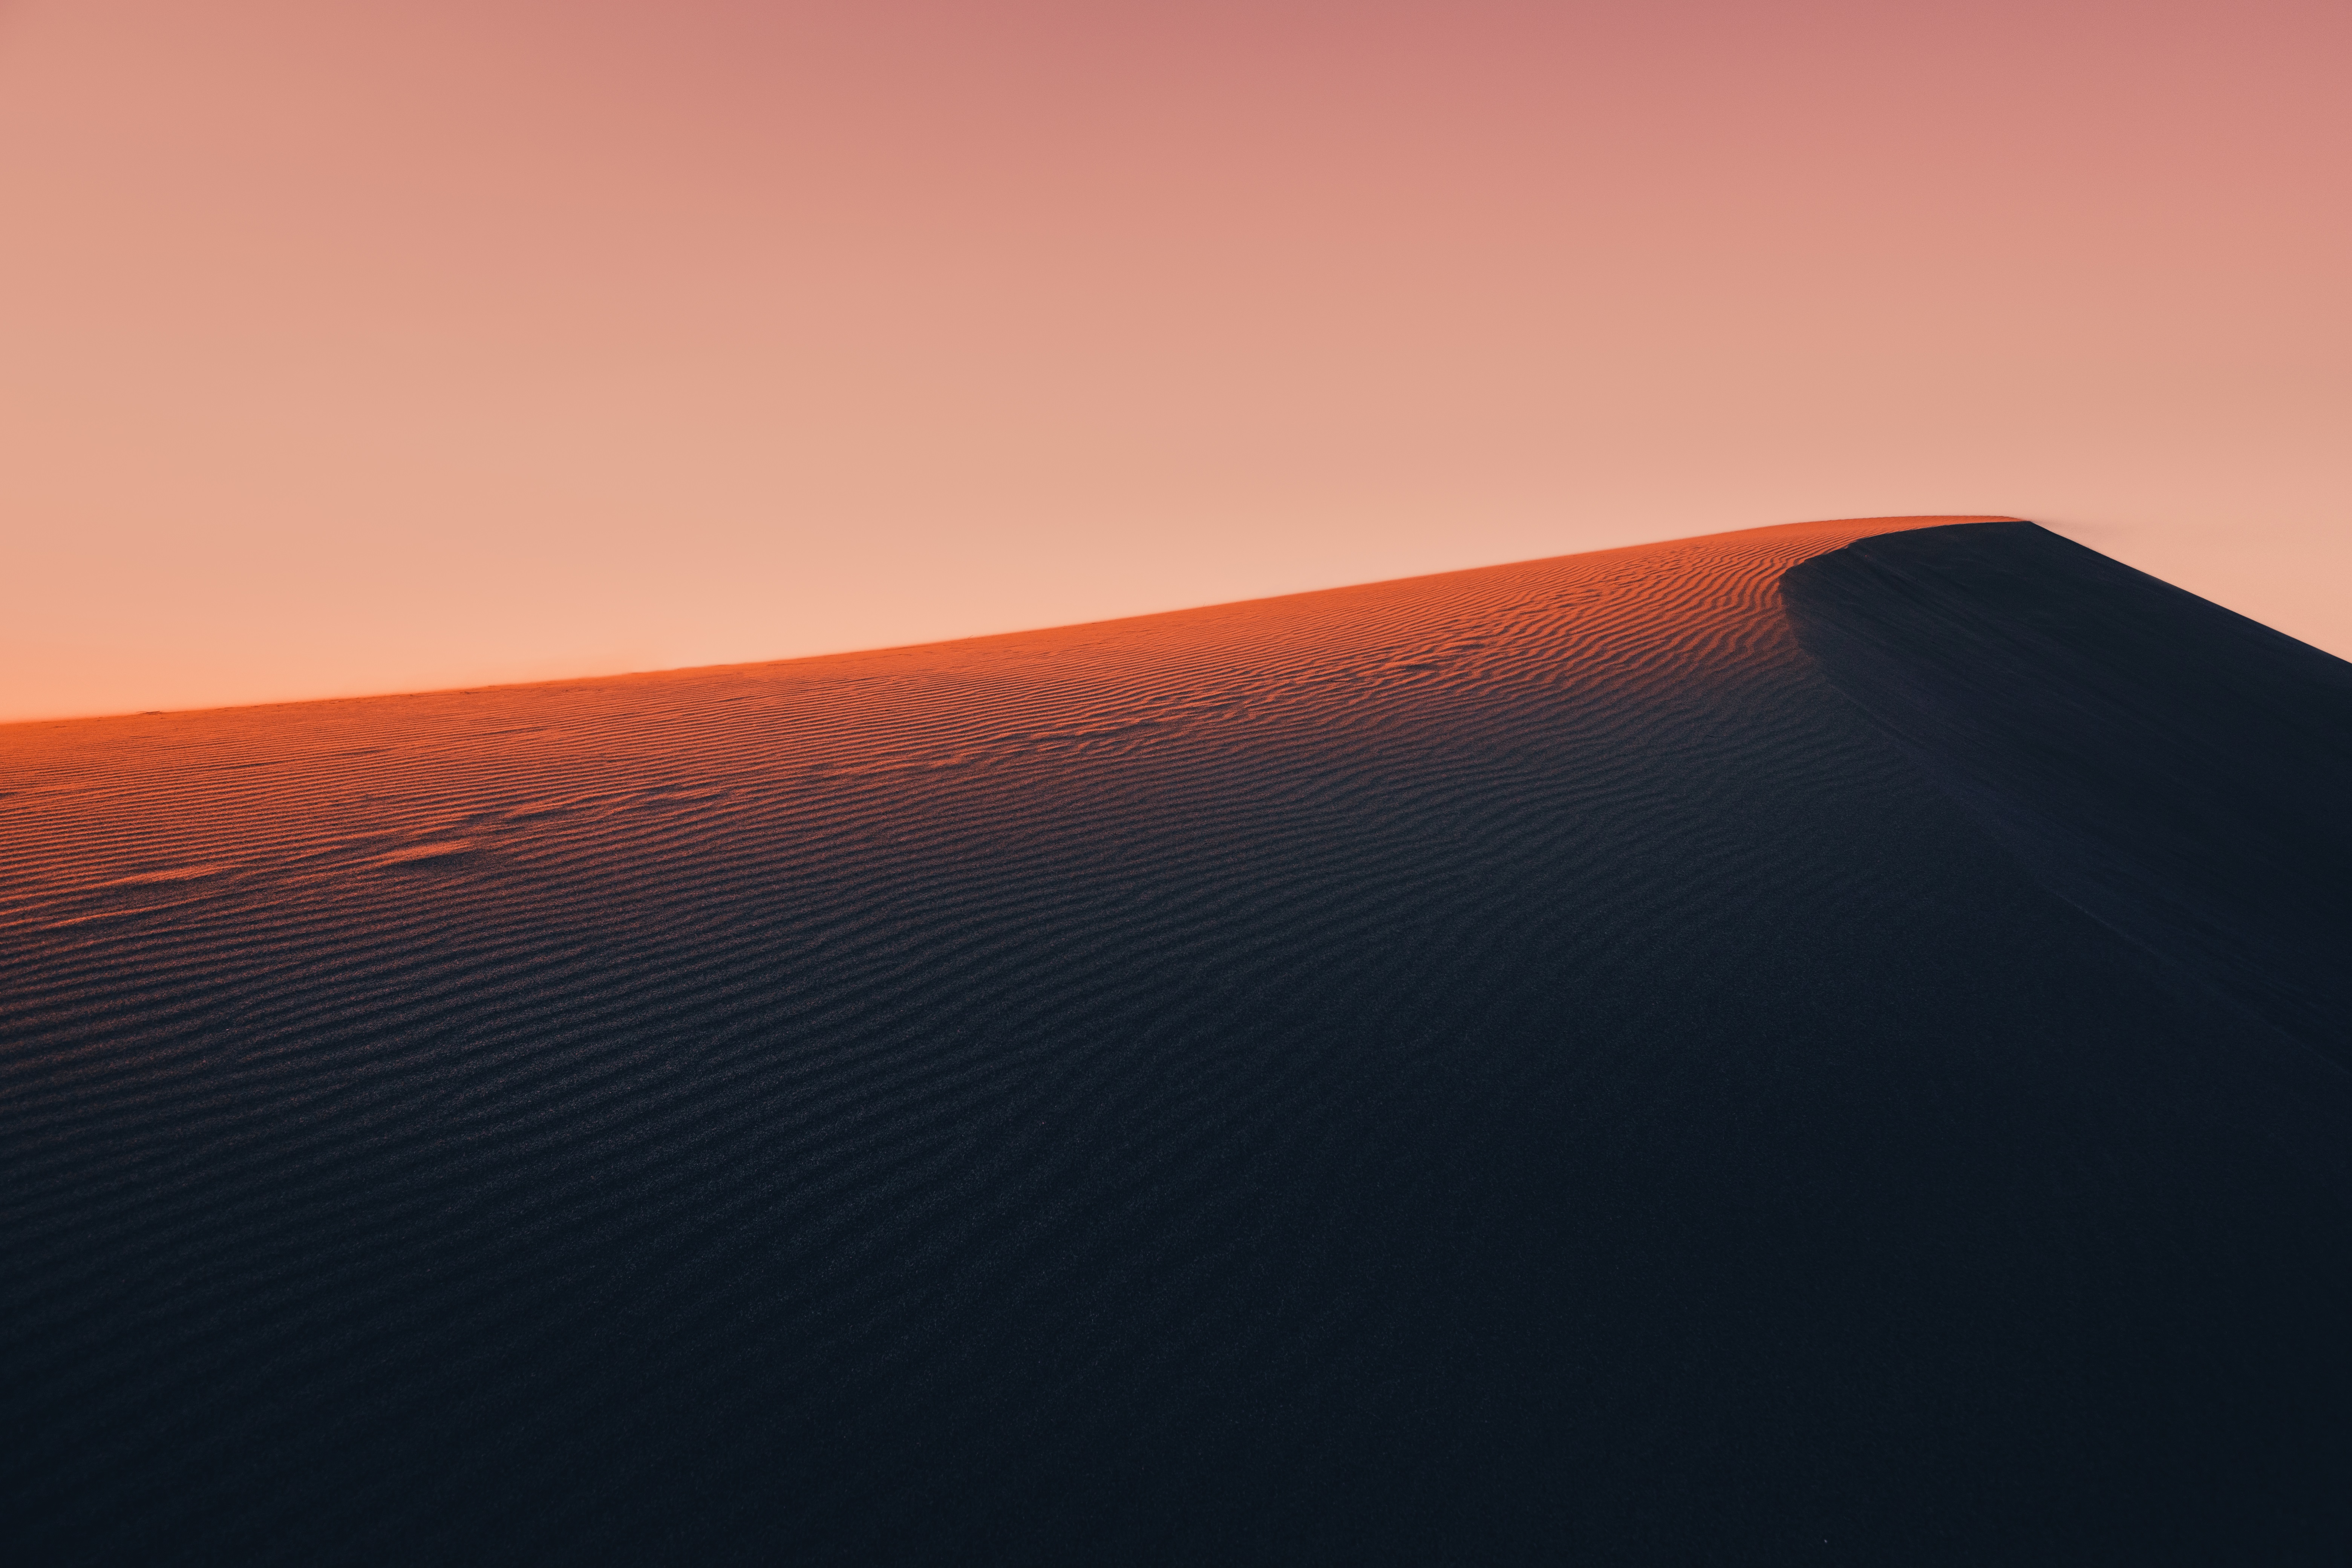 Desert Abstract Dry Sunset Lights Orange Shadow Hills Sand 6240x4160